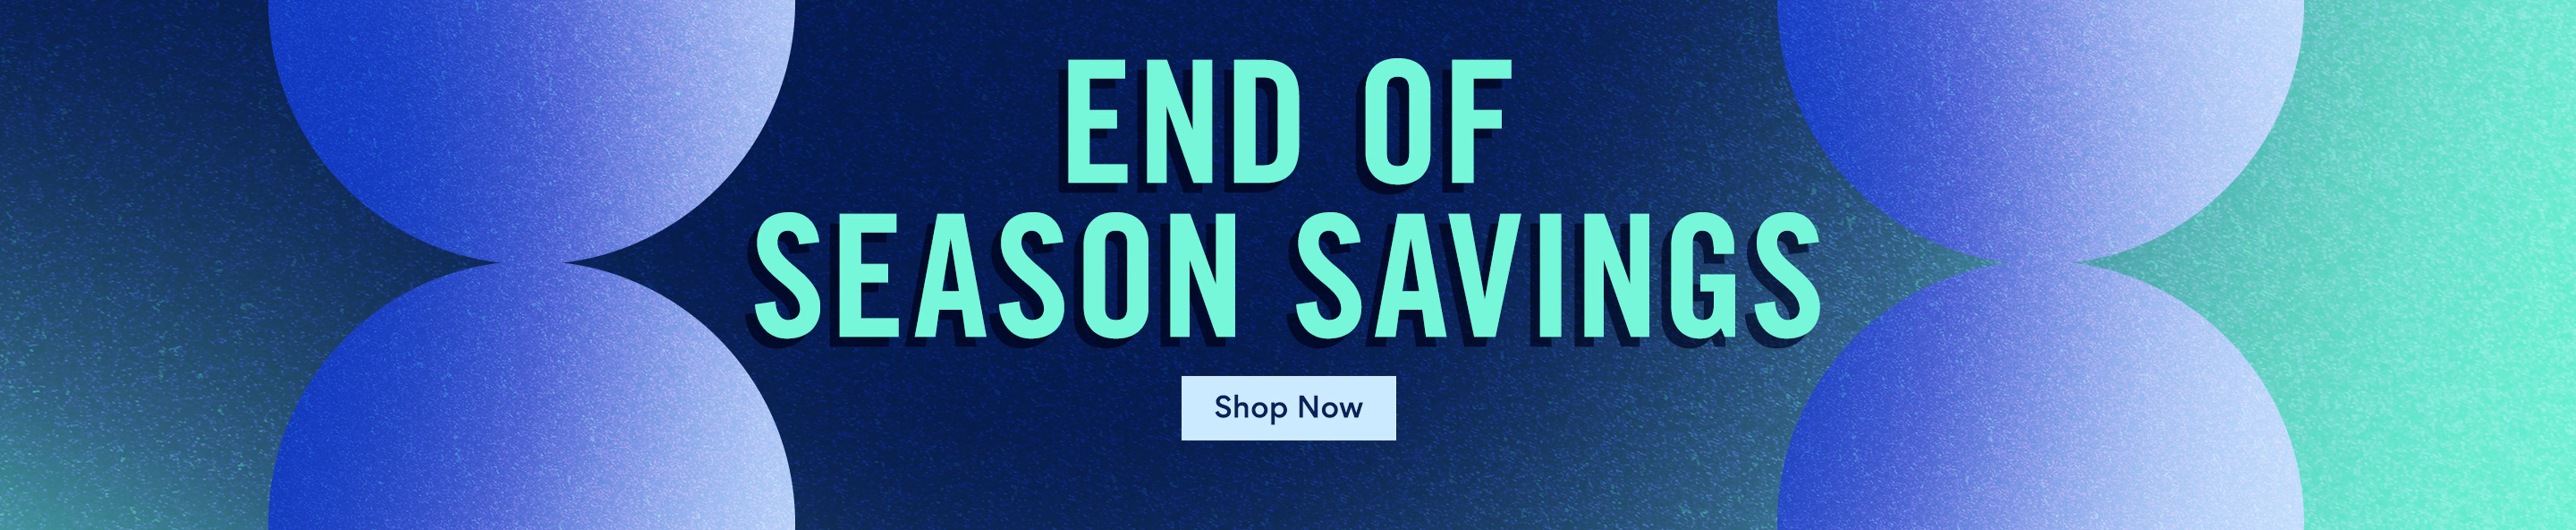 End of Season Savings. Shop Now.